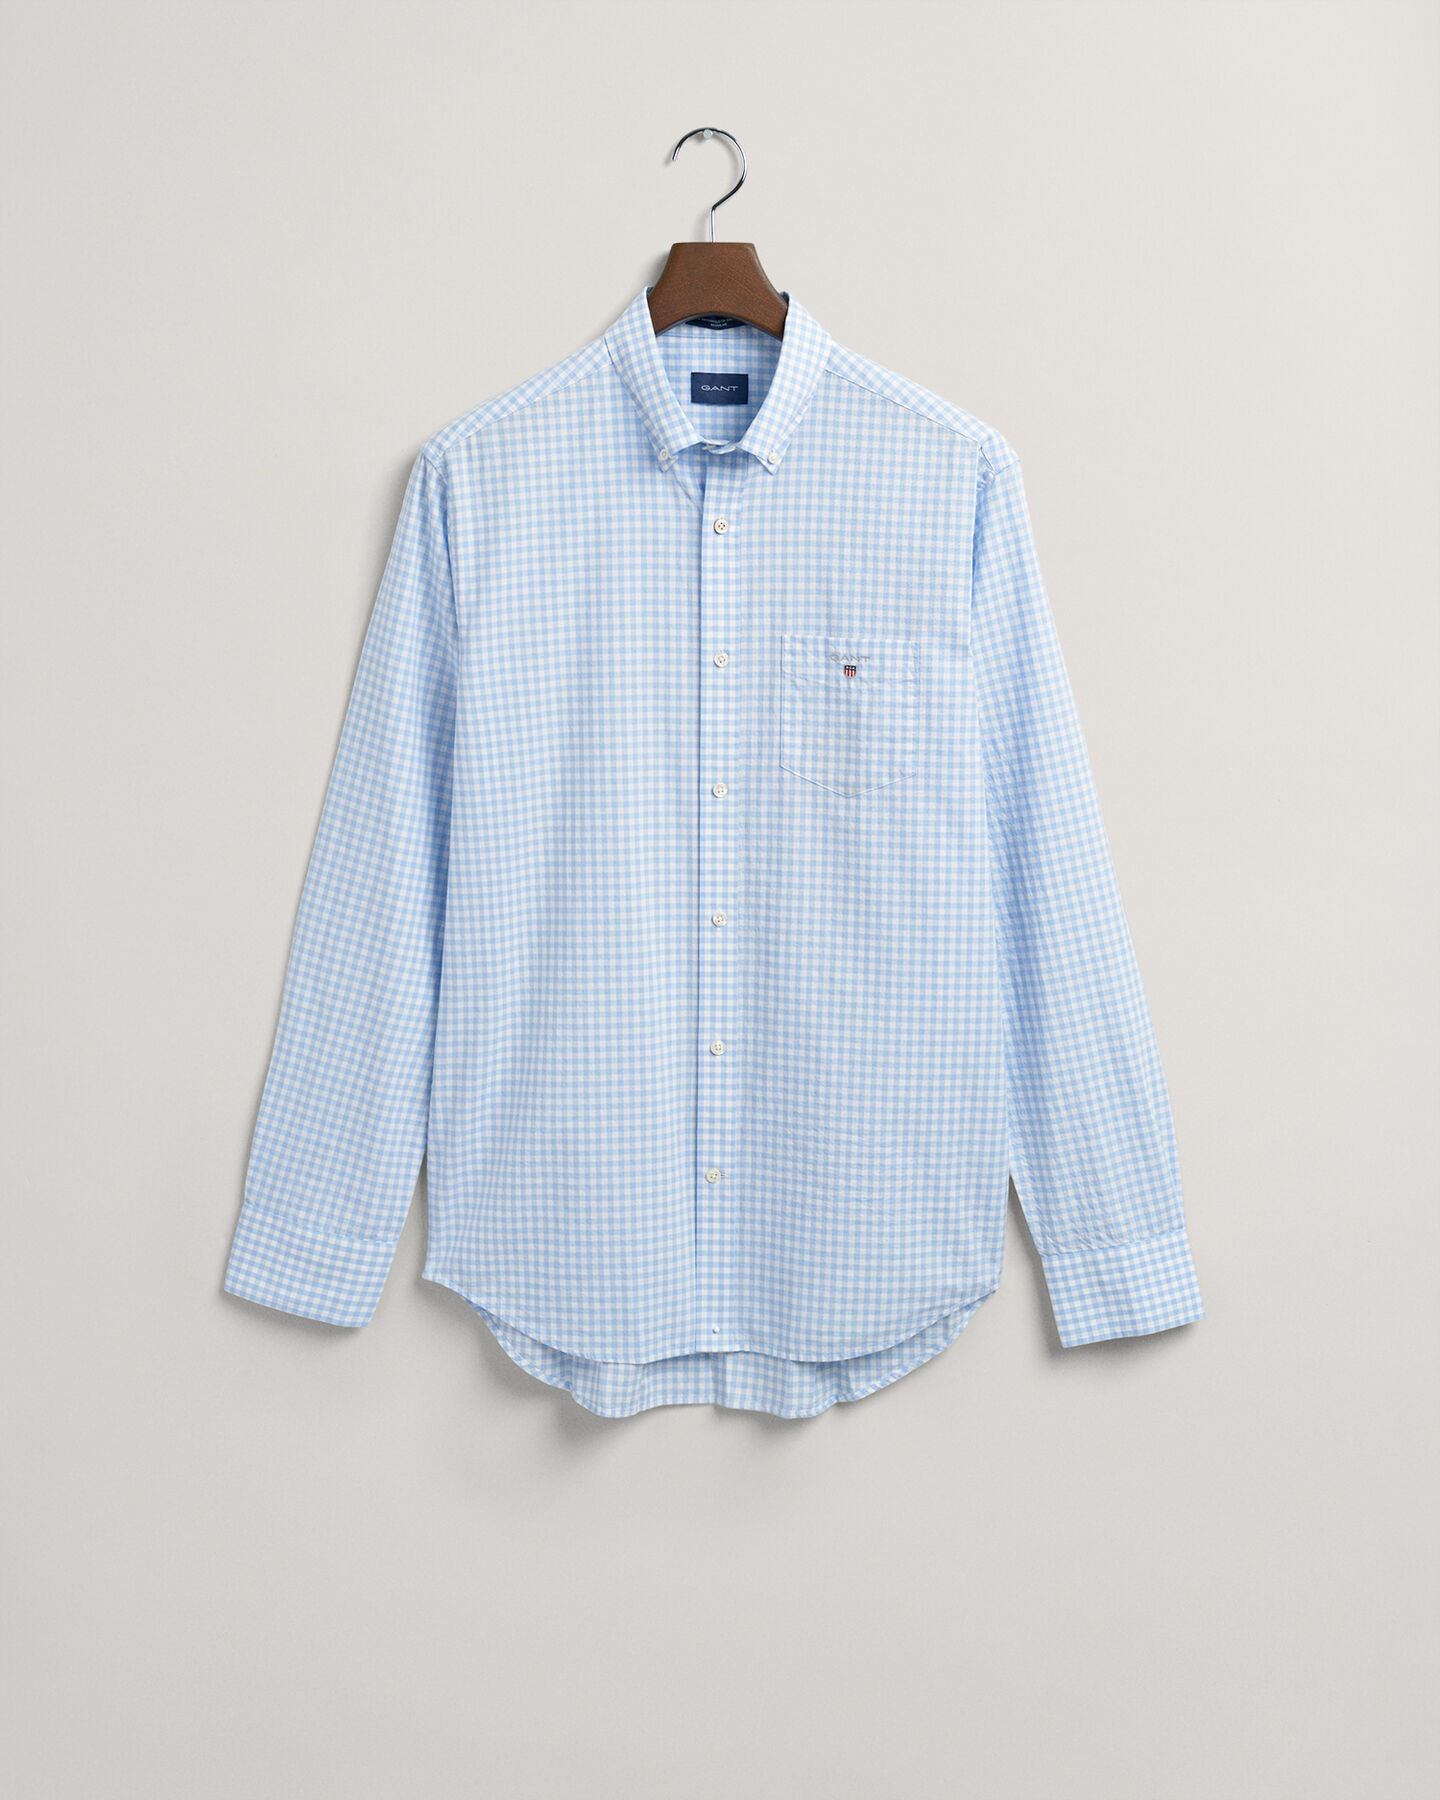 Shirt - Regular GANT Fit Broadcloth Gingham